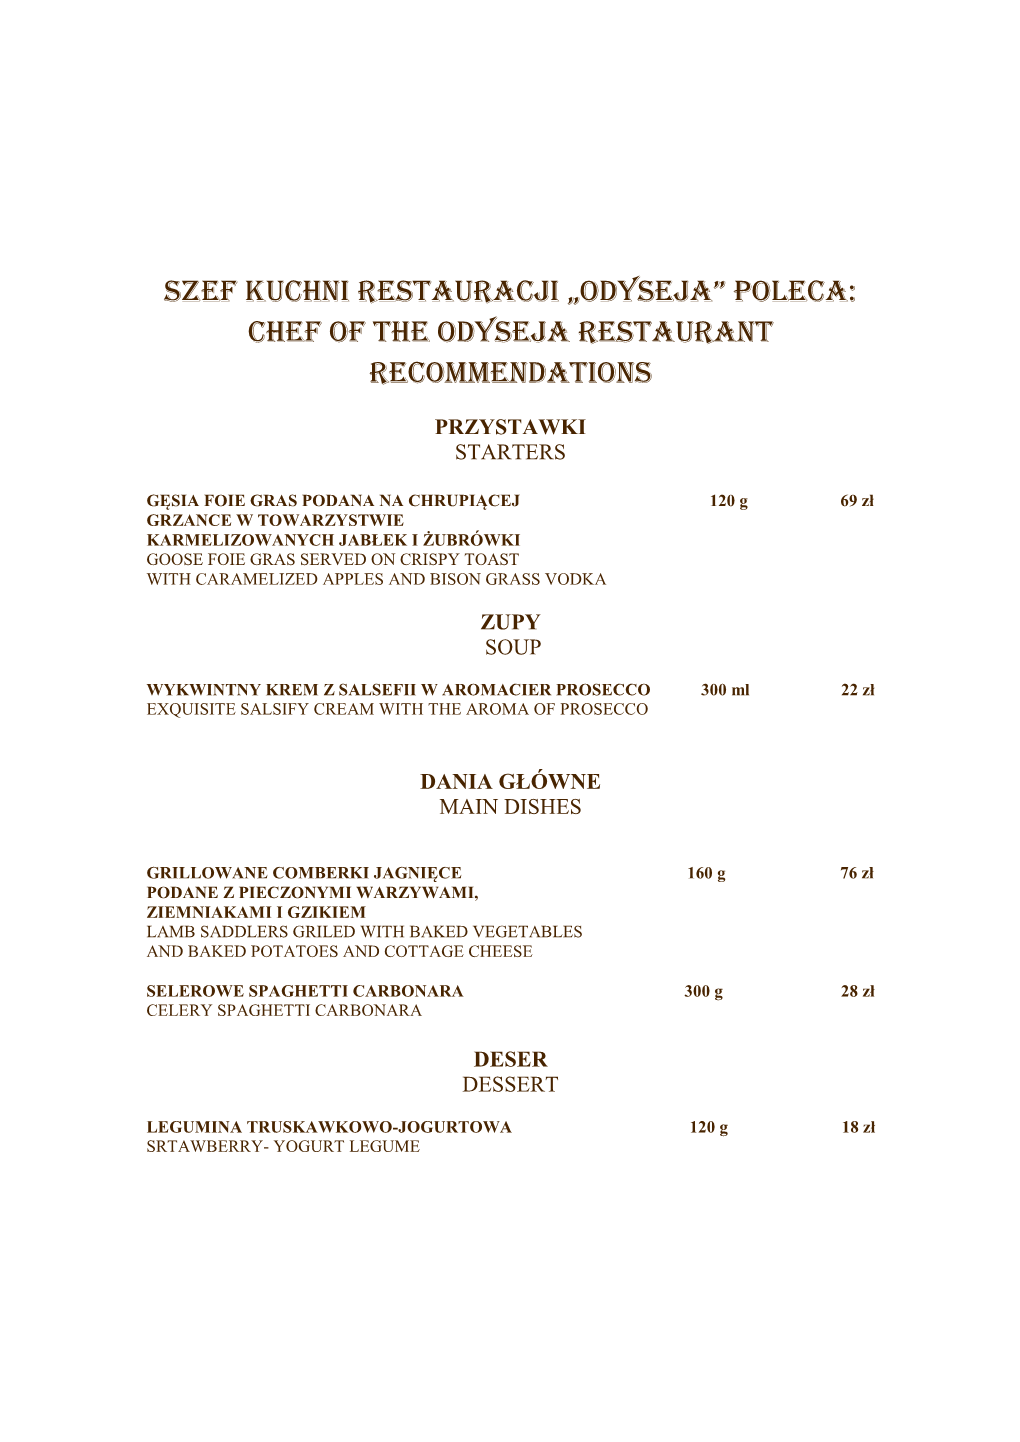 ODYSEJA” POLECA: CHEF of the ODYSEJA Restaurant RECOMMENDATIONS